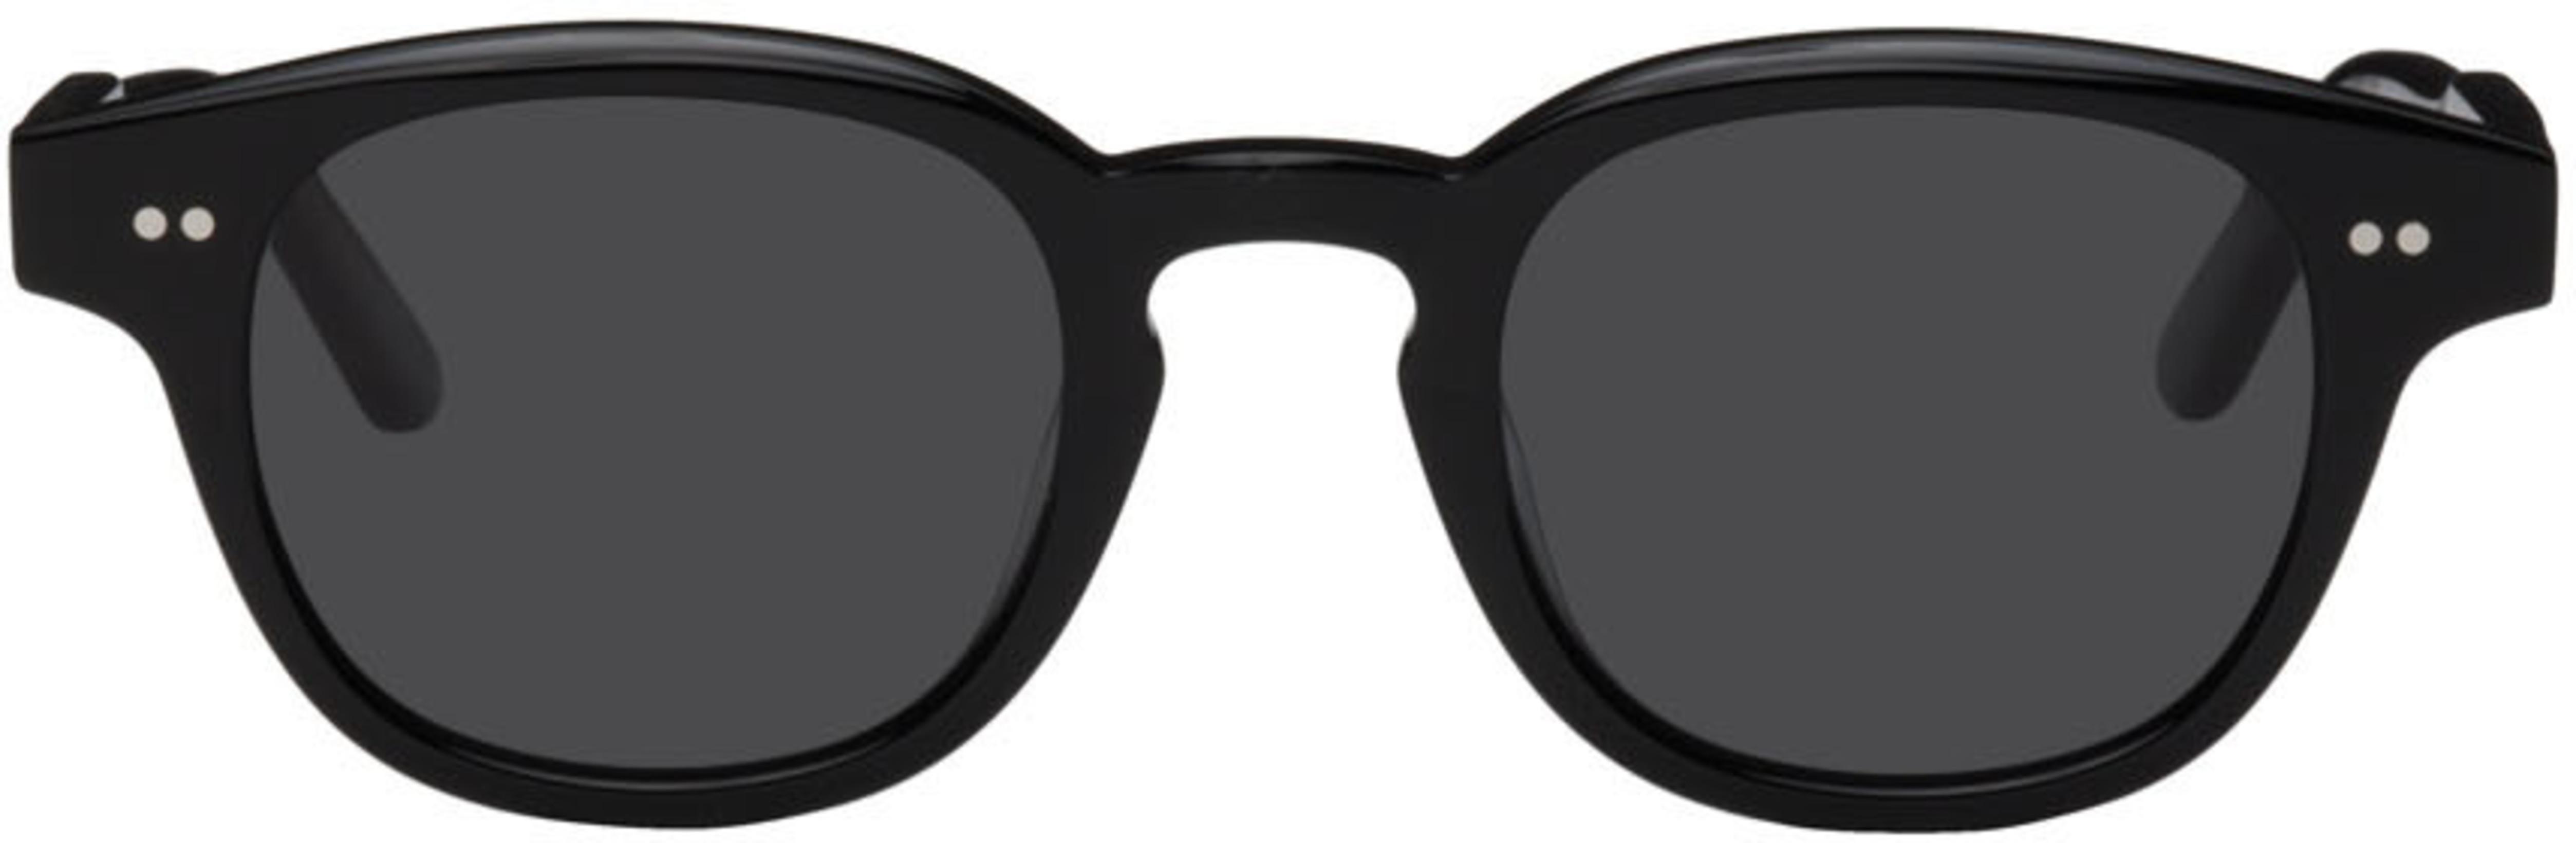 Black 01 Sunglasses by CHIMI